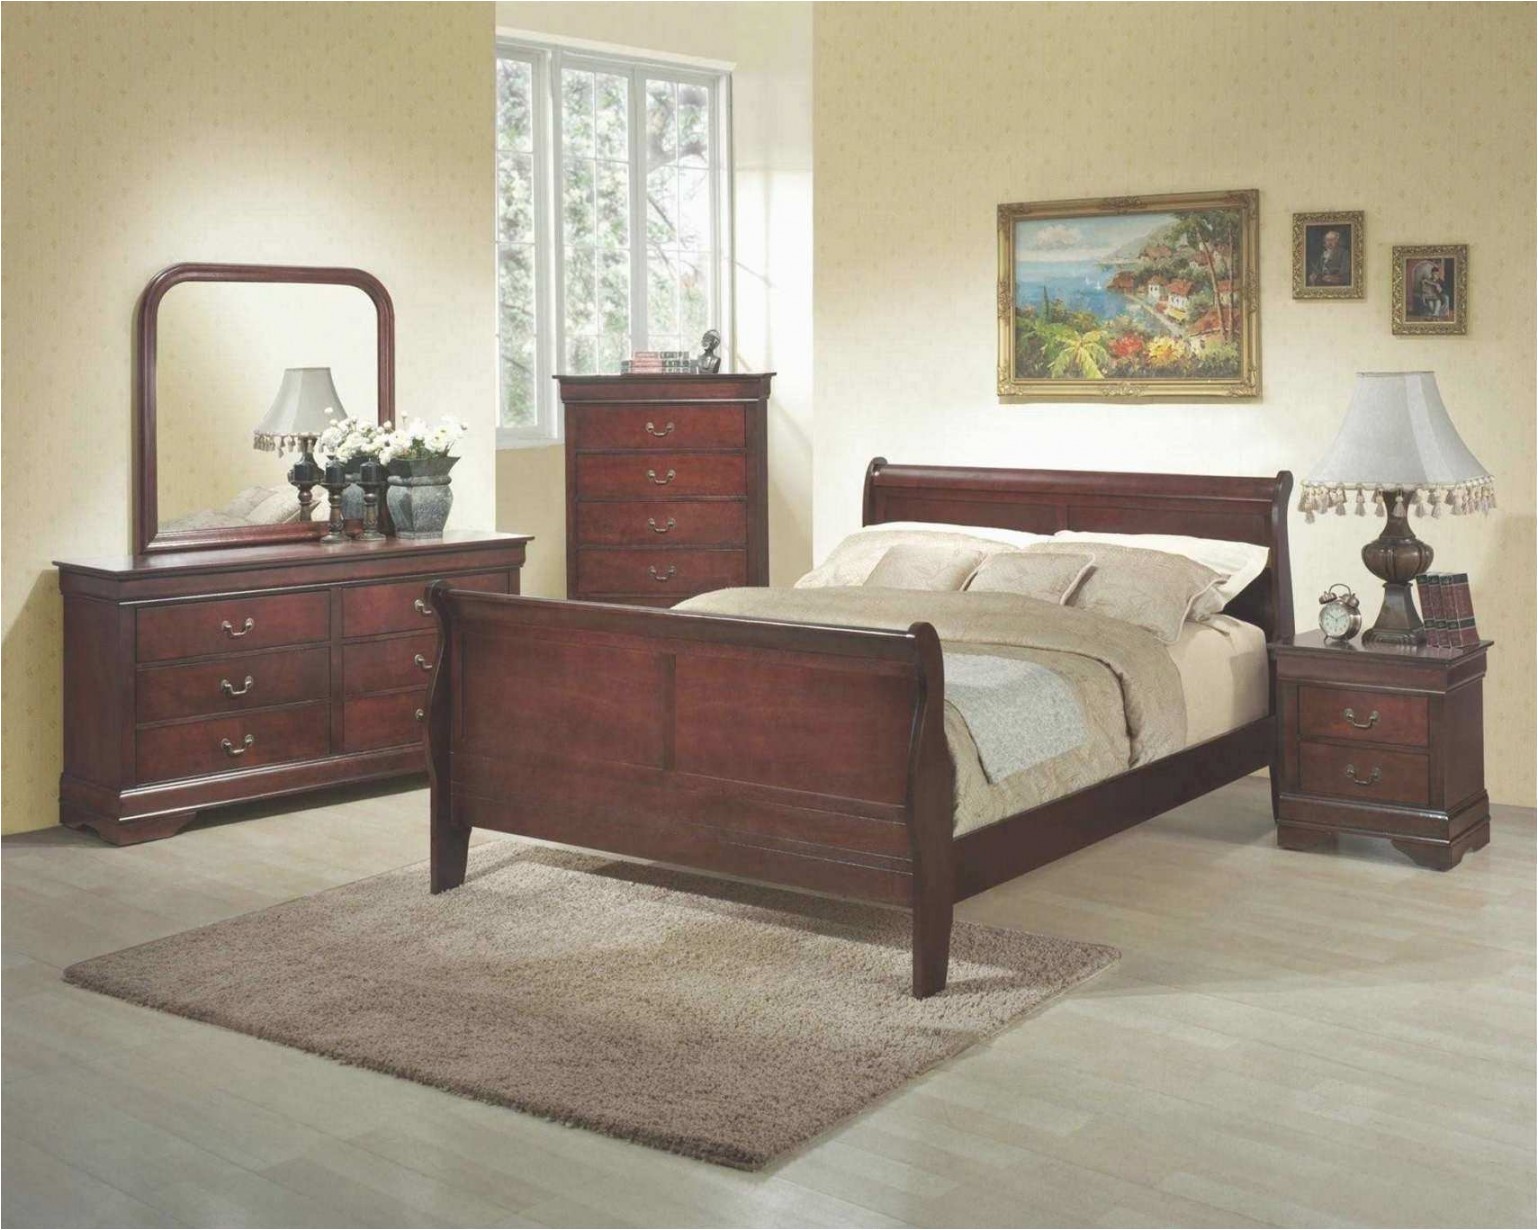 thomasville bedroom furniture for sale